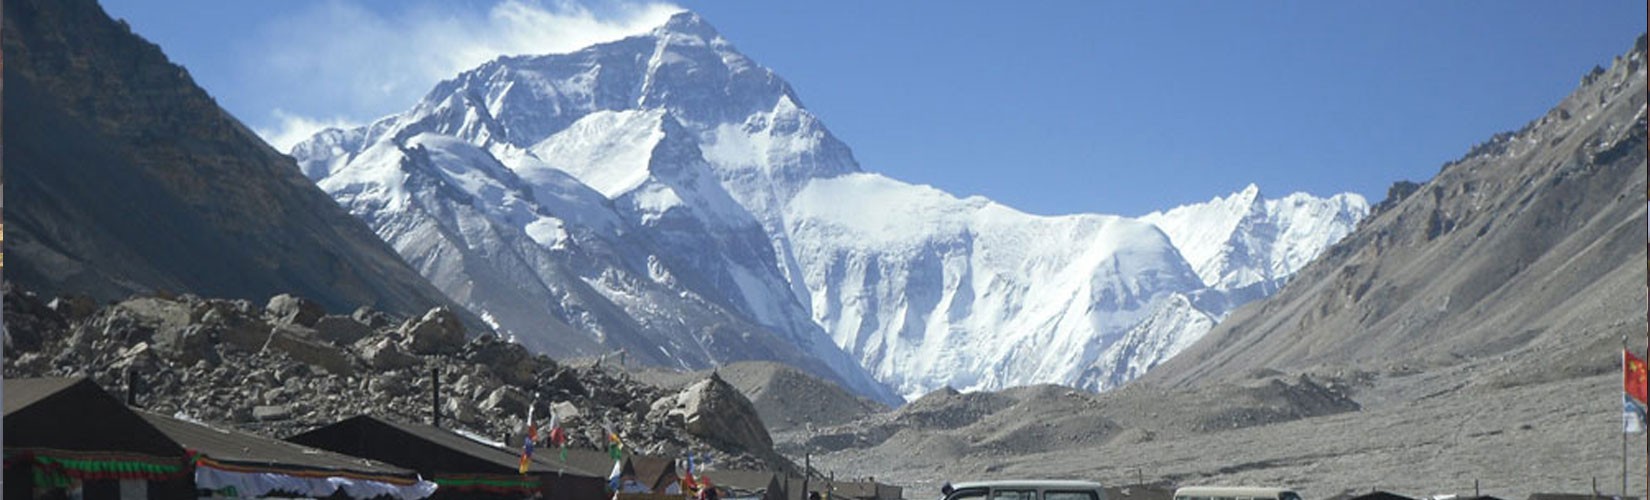 Everest Base Camp Tour Via Lhasa